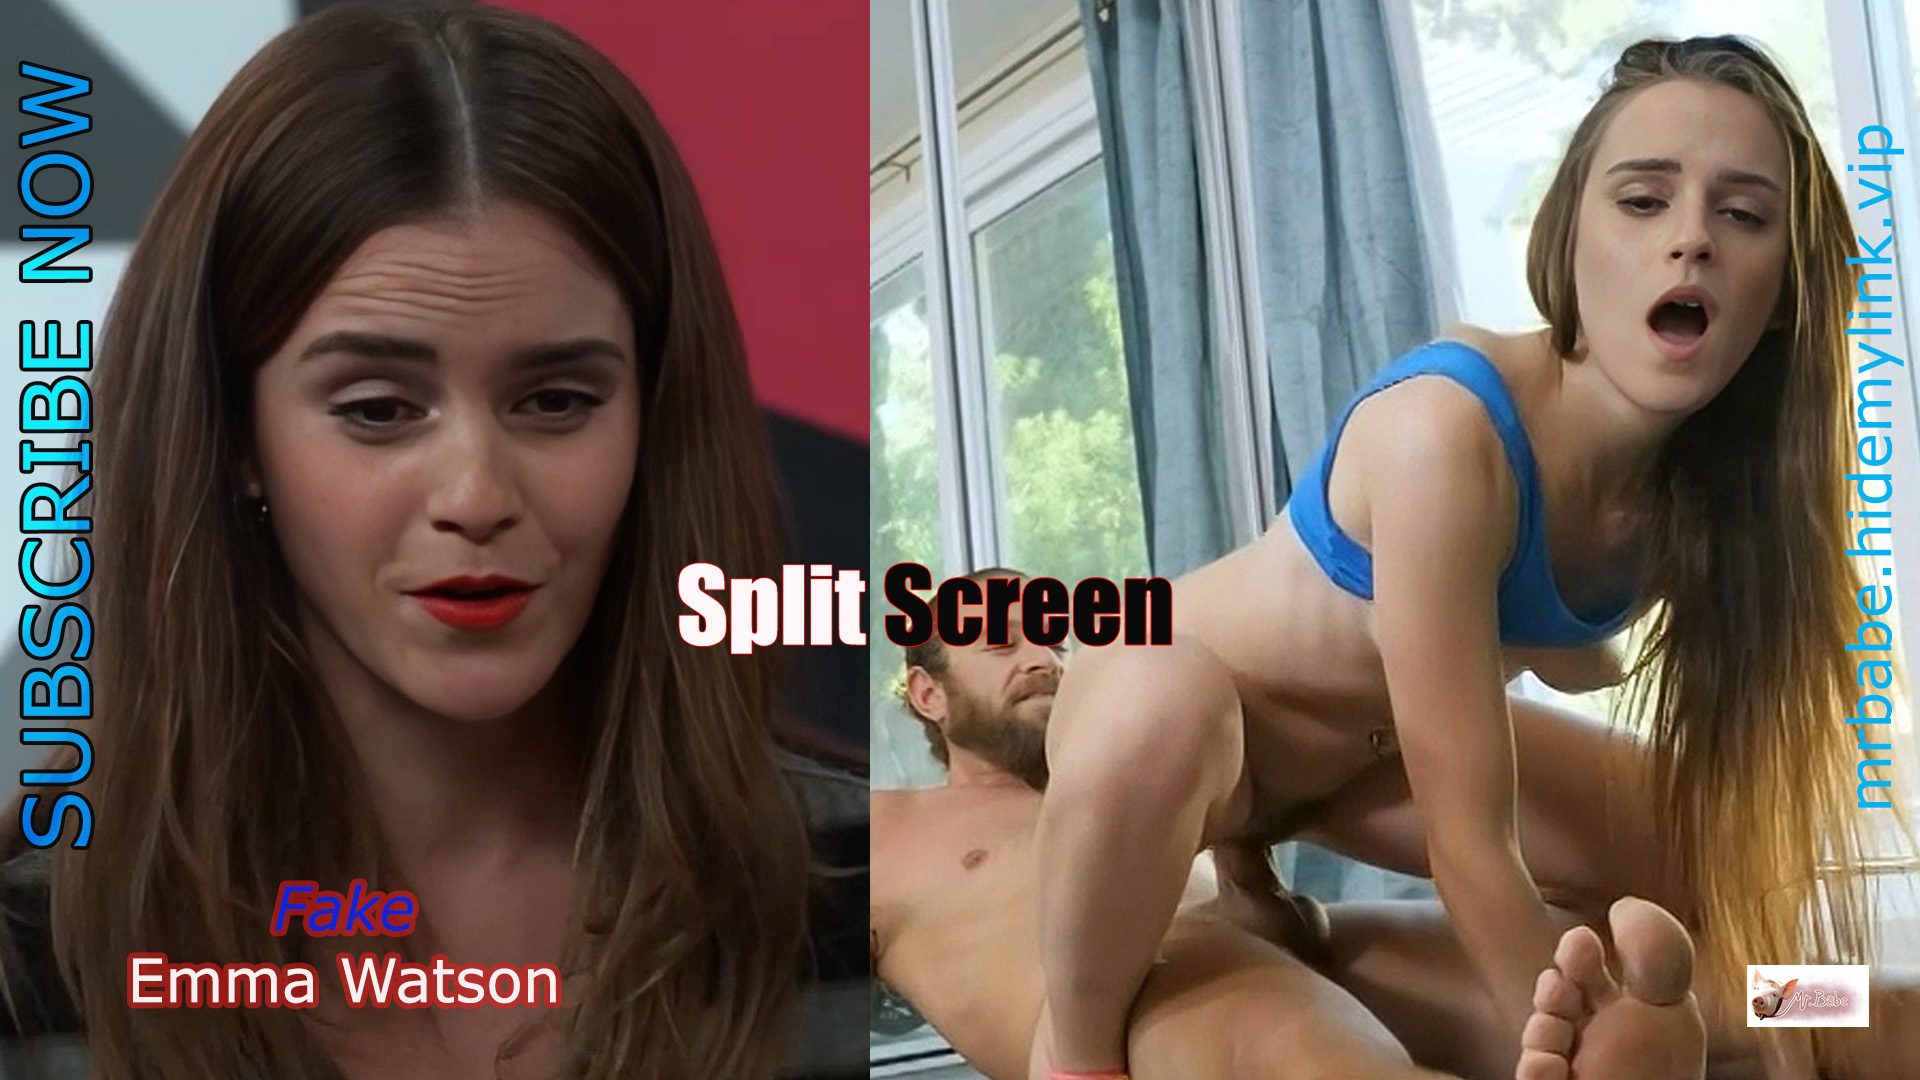 Fake Emma Watson (trailer) - 409 / Split Screen / Free Download